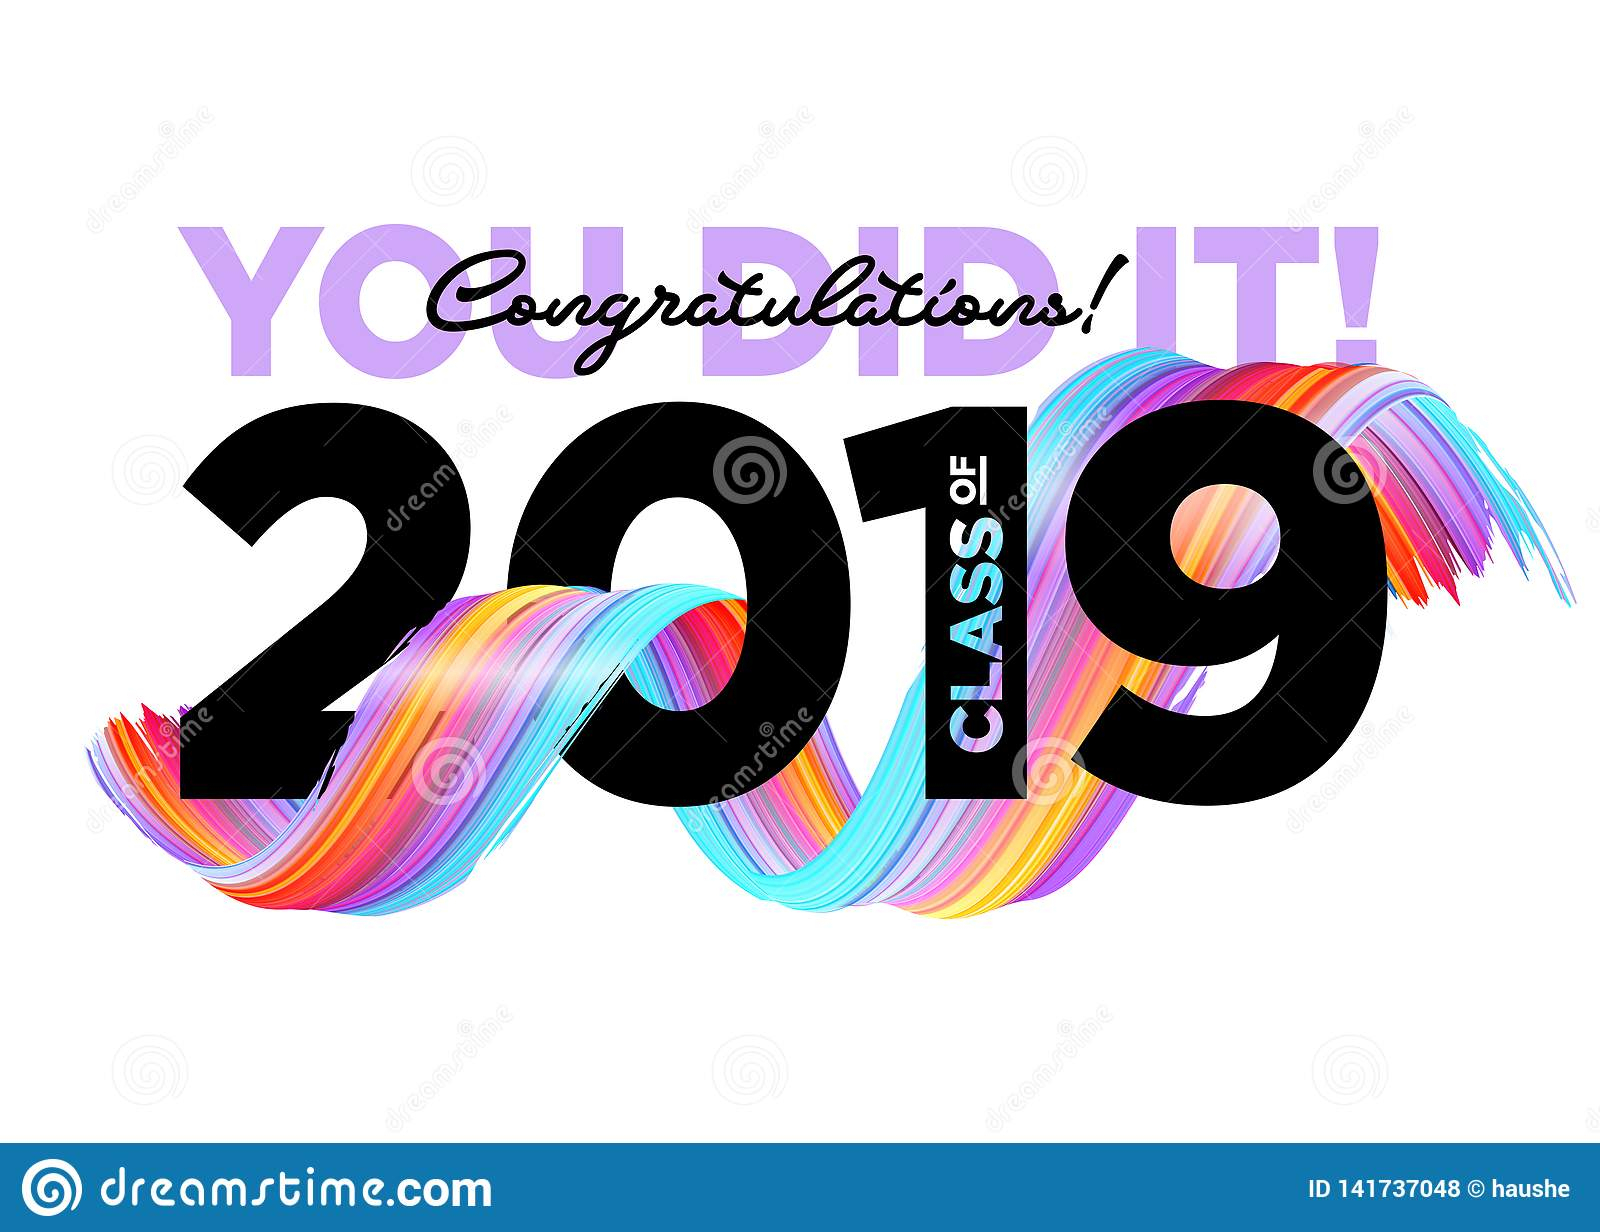 Congratulations Graduates Class Of 2019 Vector Logo In Graduation Banner Template